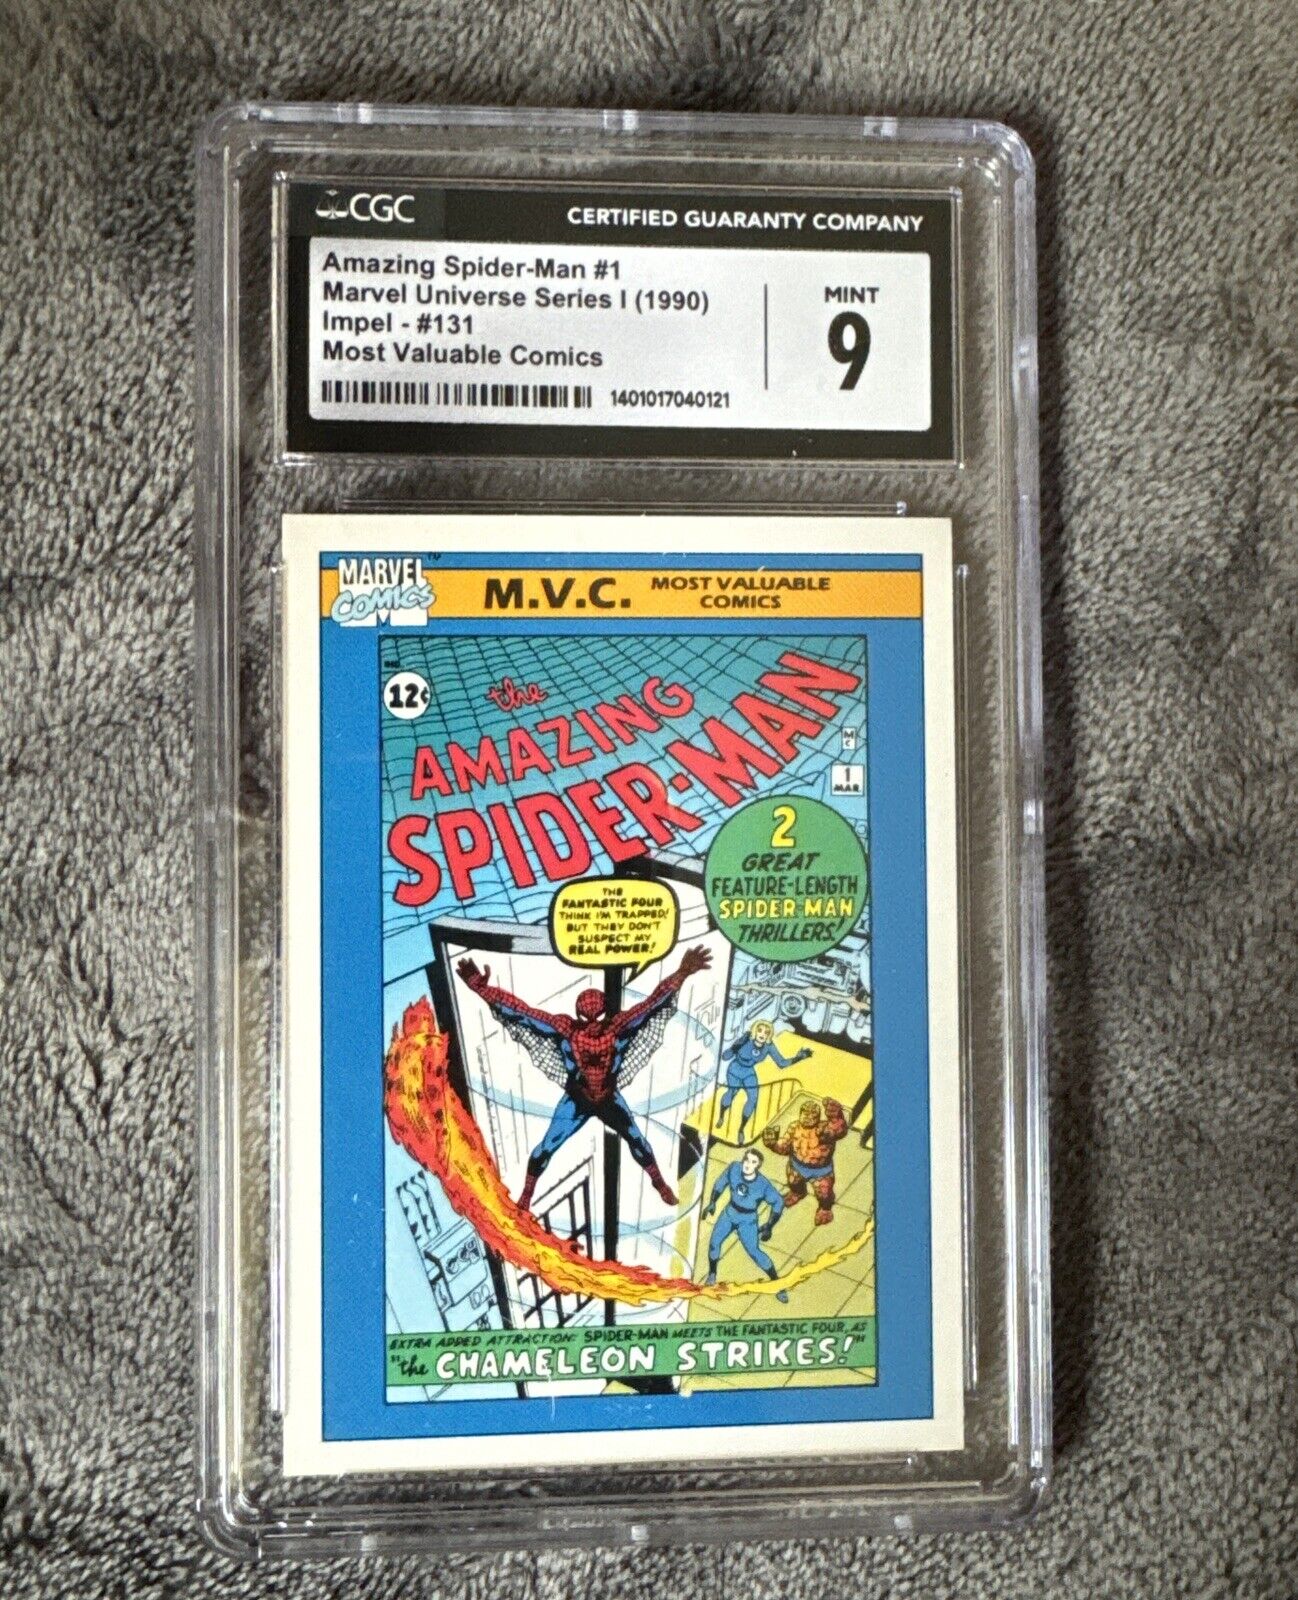 1990 Impel Marvel Universe #131 Amazing Spider-Man #1 CGC 9 Mint